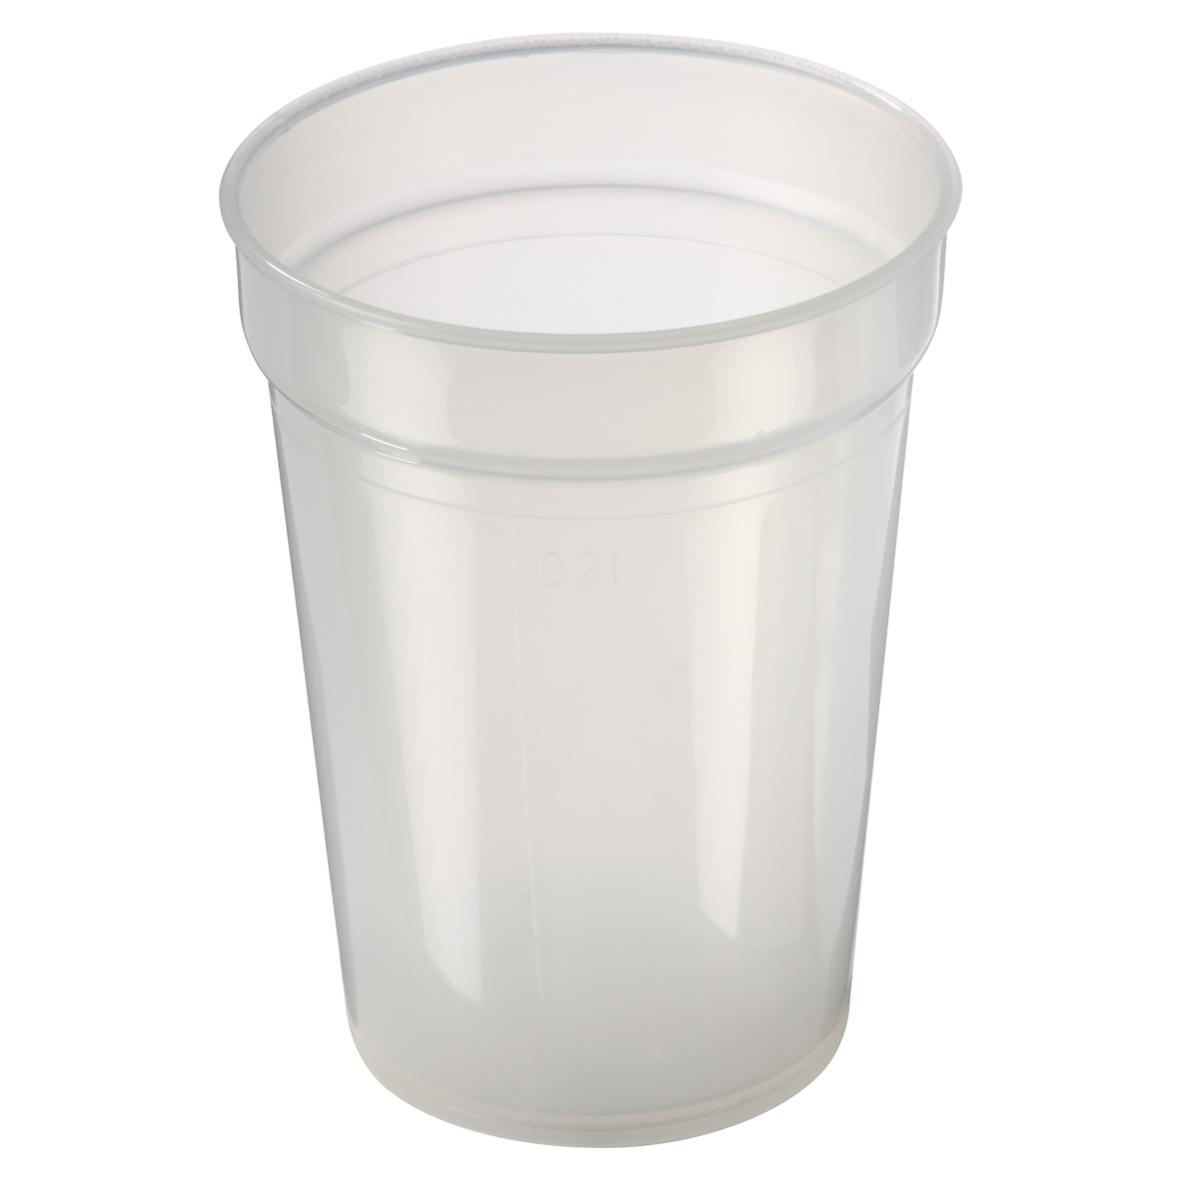 Drinking cup "Deposit" 0.3 l